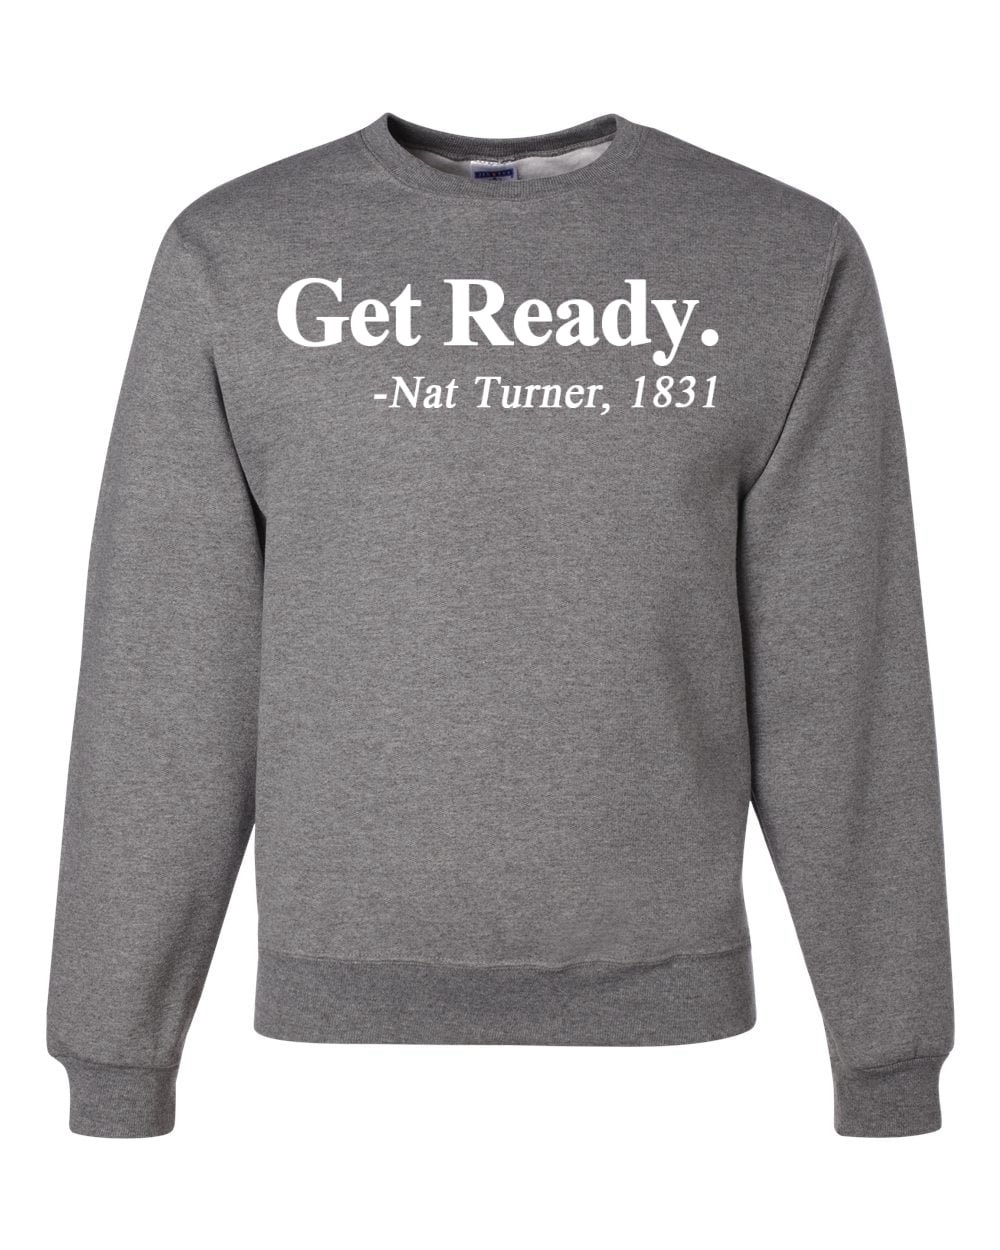 Wild Bobby, Black History Month Get Ready. Nat Turner 1831 Unisex Graphic Hoodie Sweatshirt, Light Pink, Medium, Men's